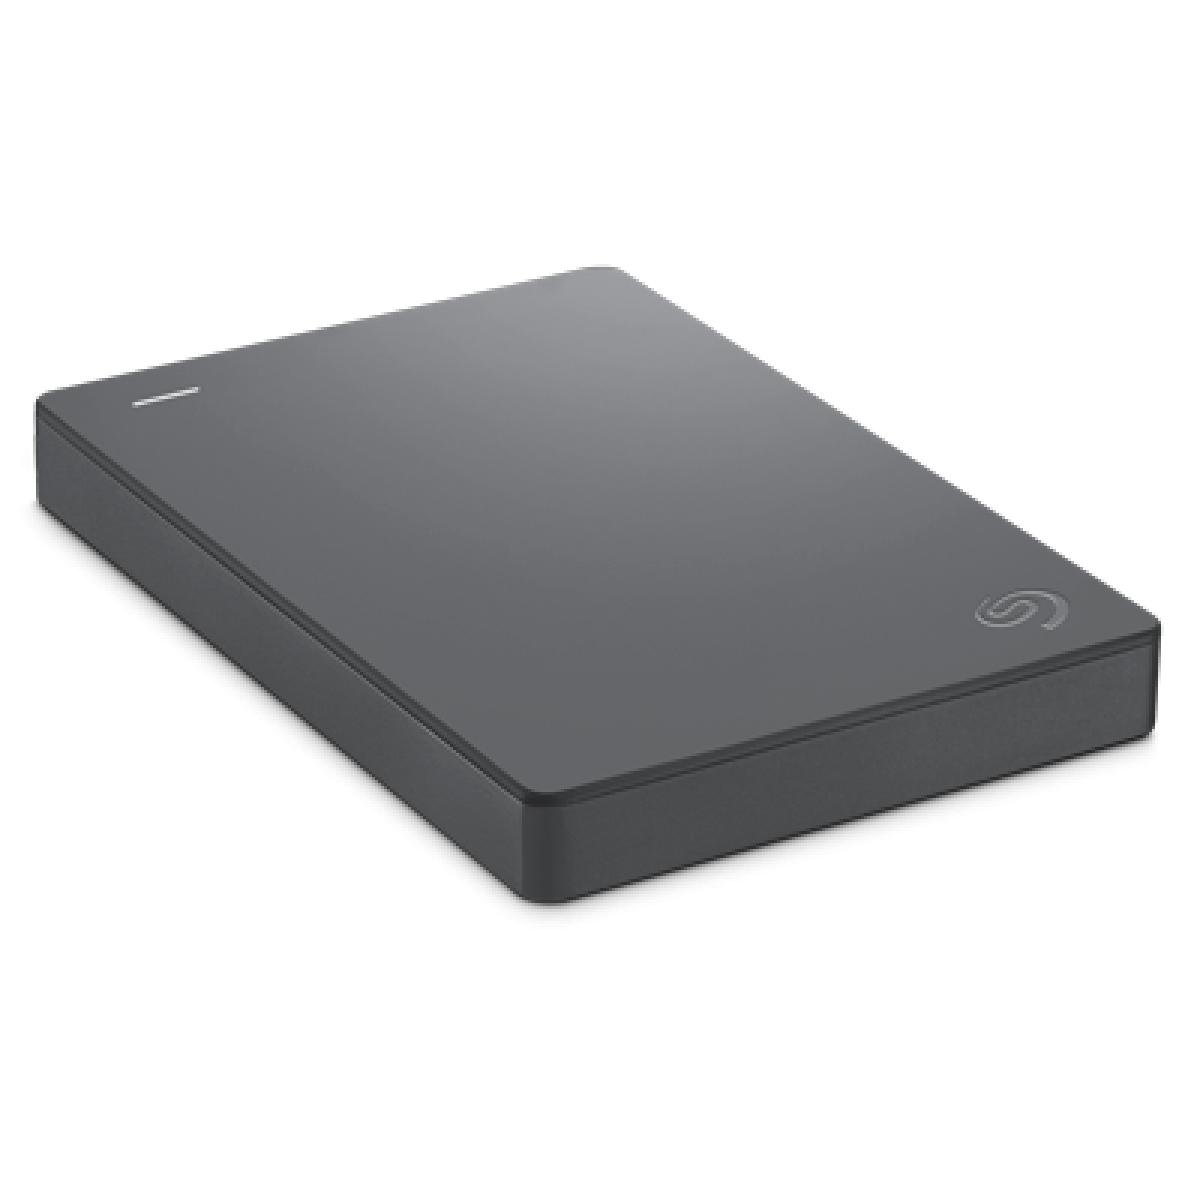 HD Externo Seagate Basic, 2TB, USB 3.0, Black, STJL2000400